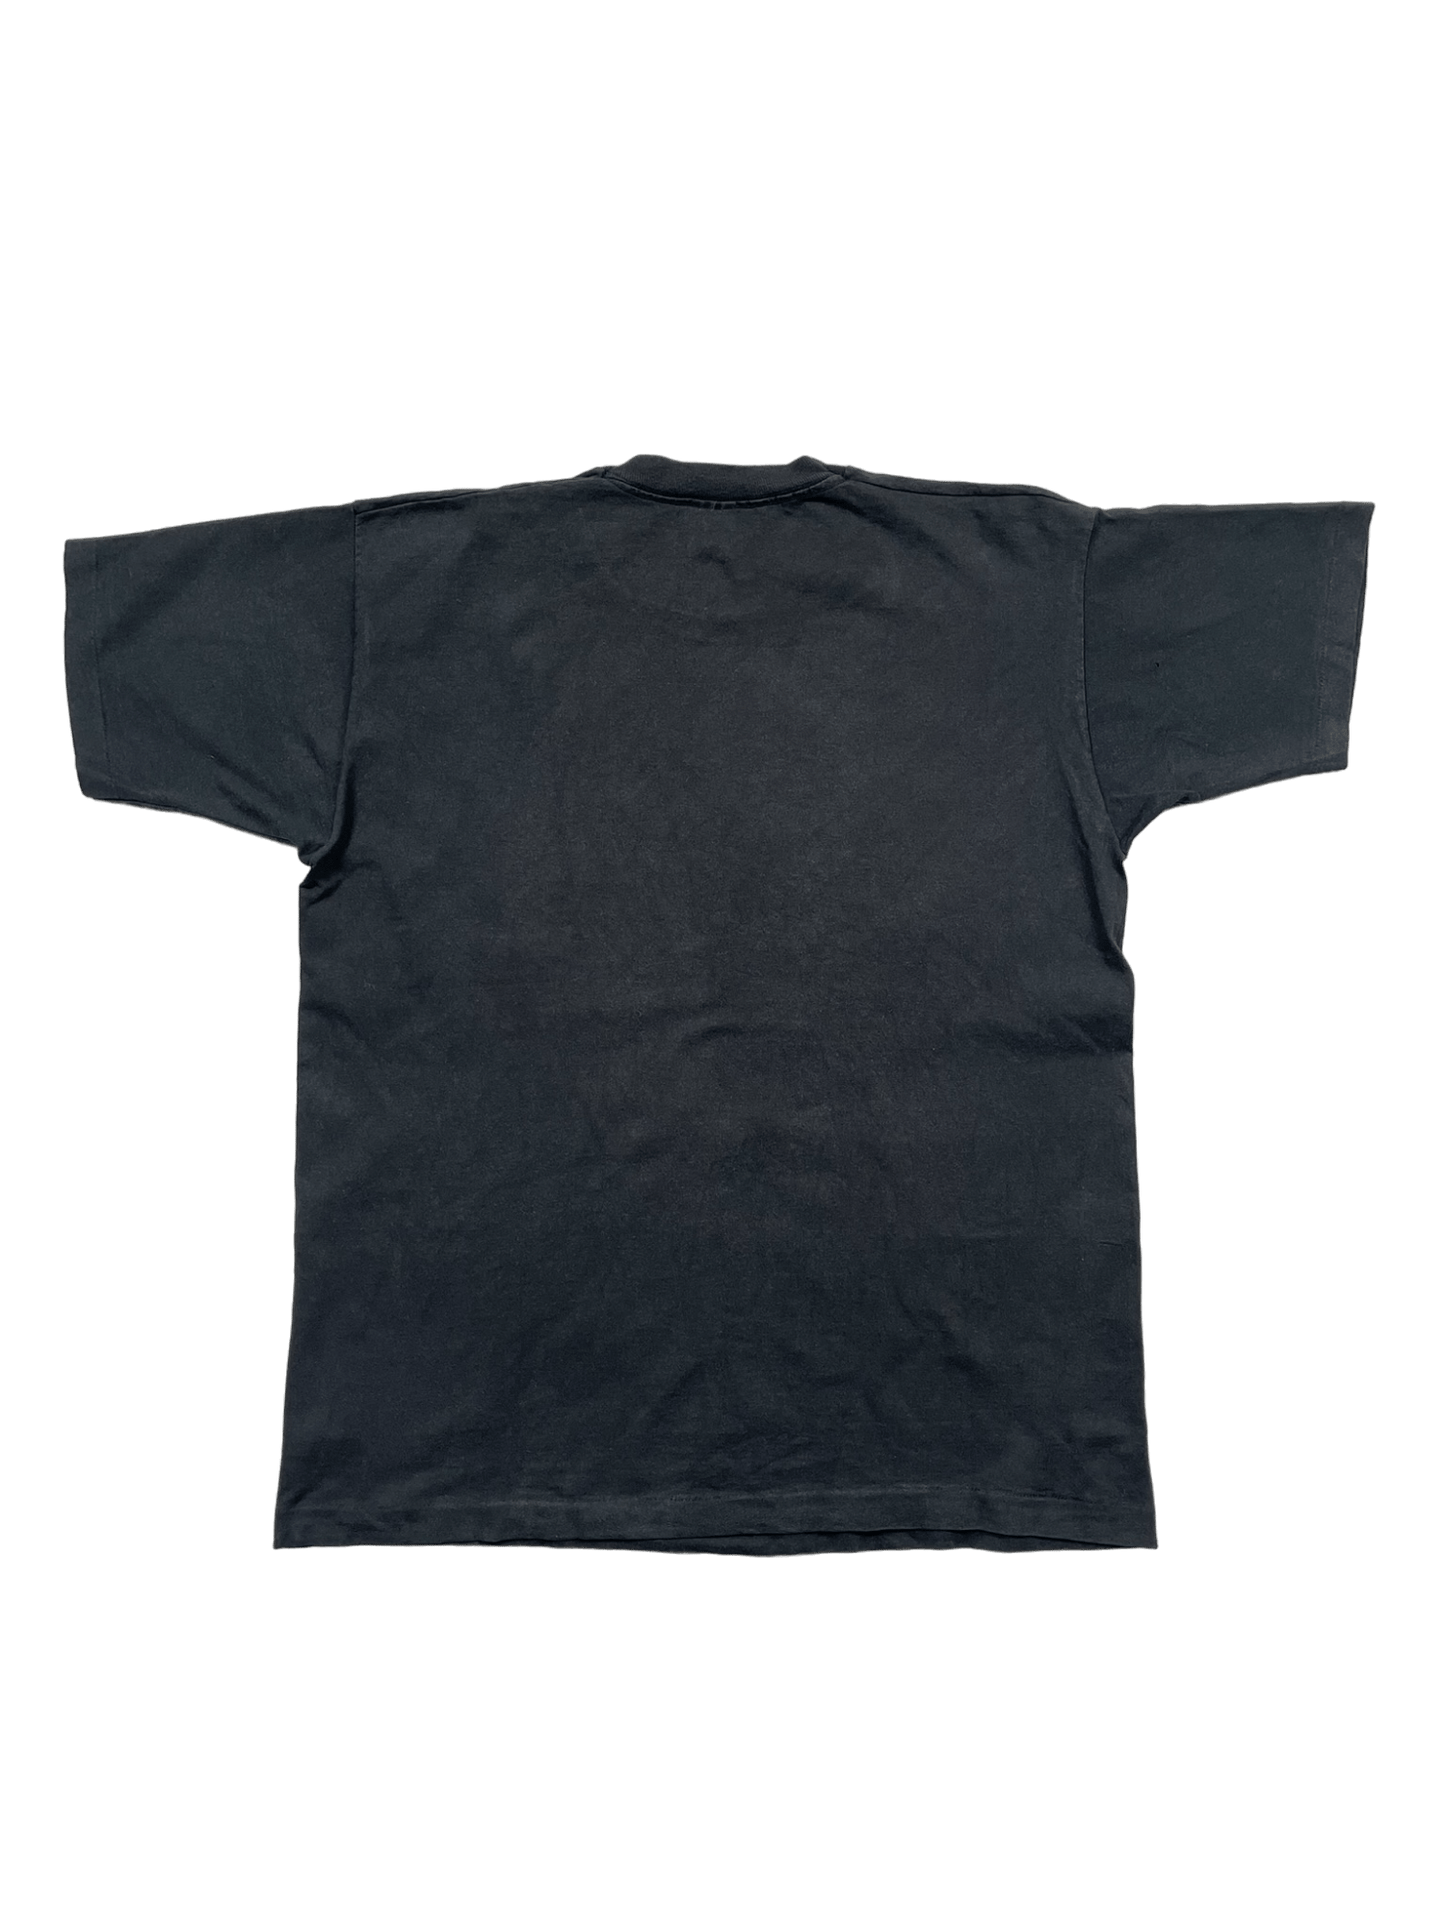 The Vintage Racks T-Shirt Museum - XL